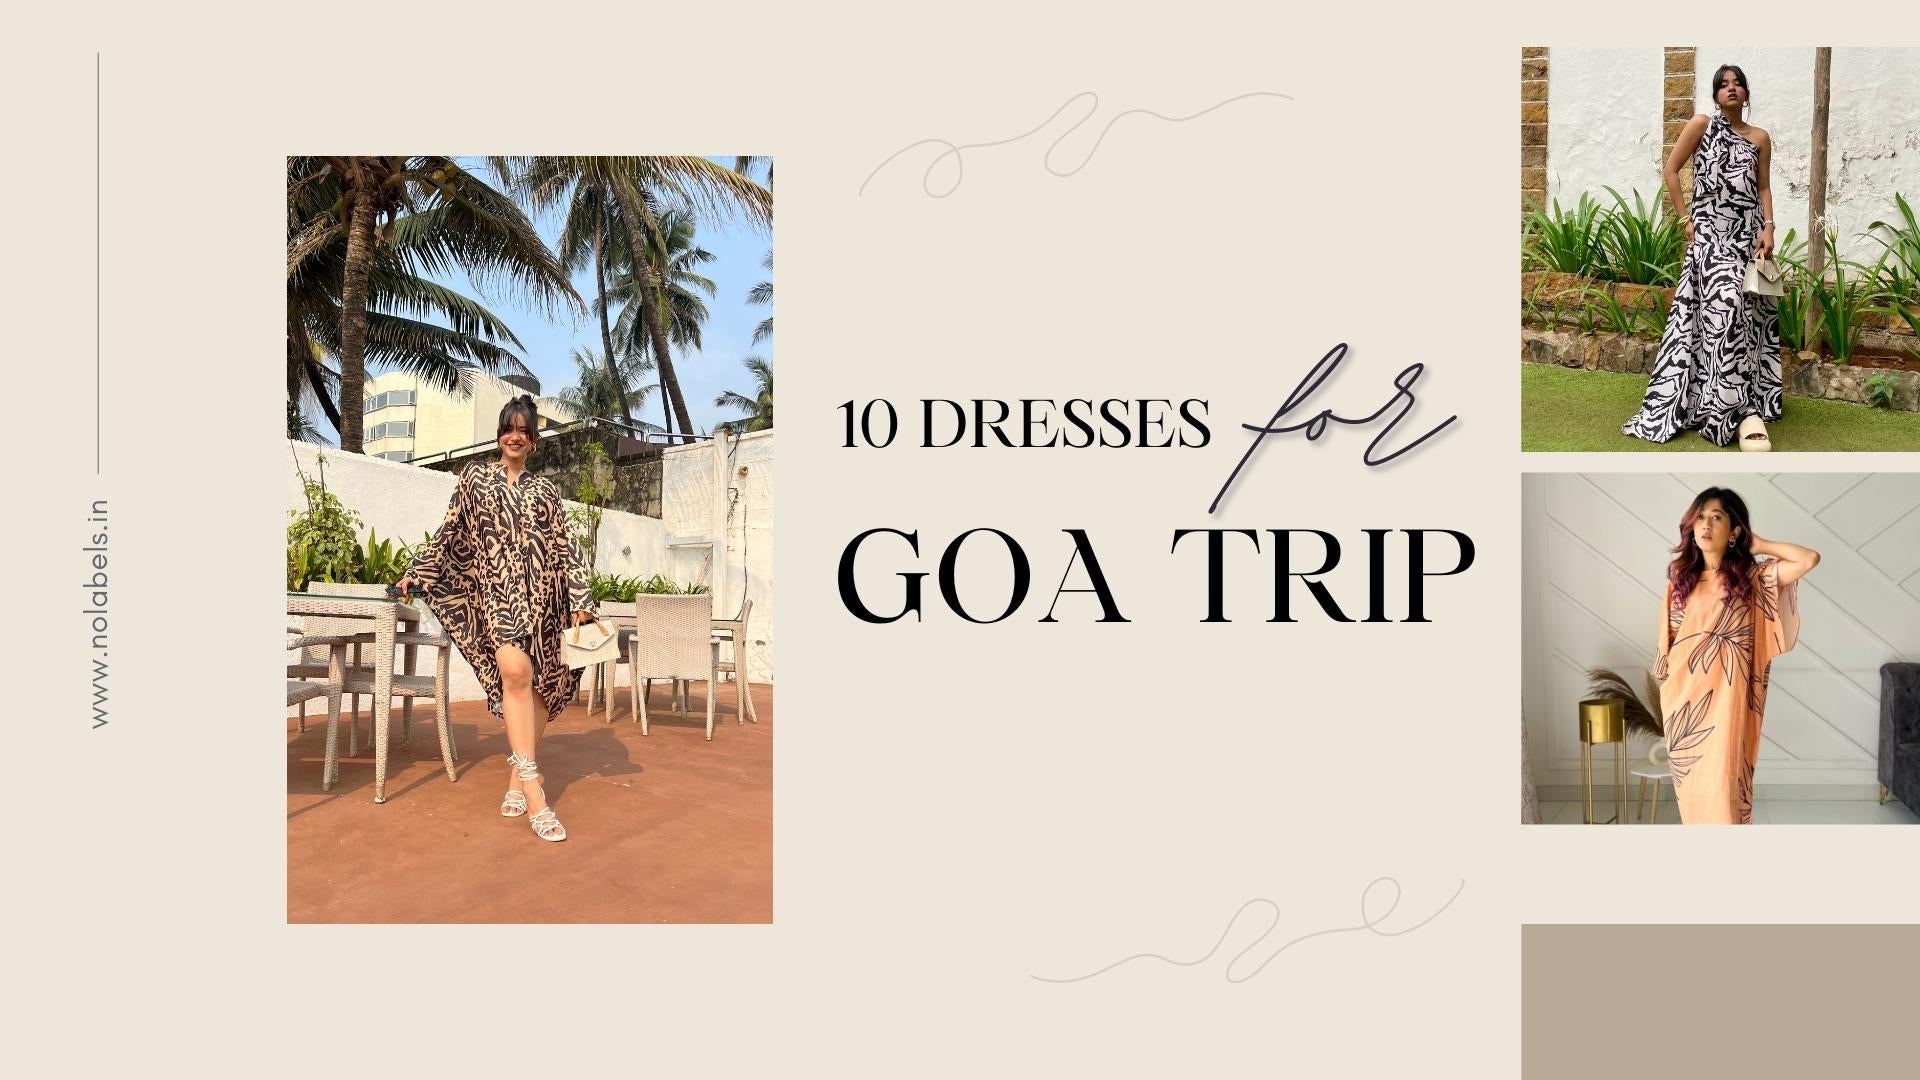 Dresses For Your Goa Trip